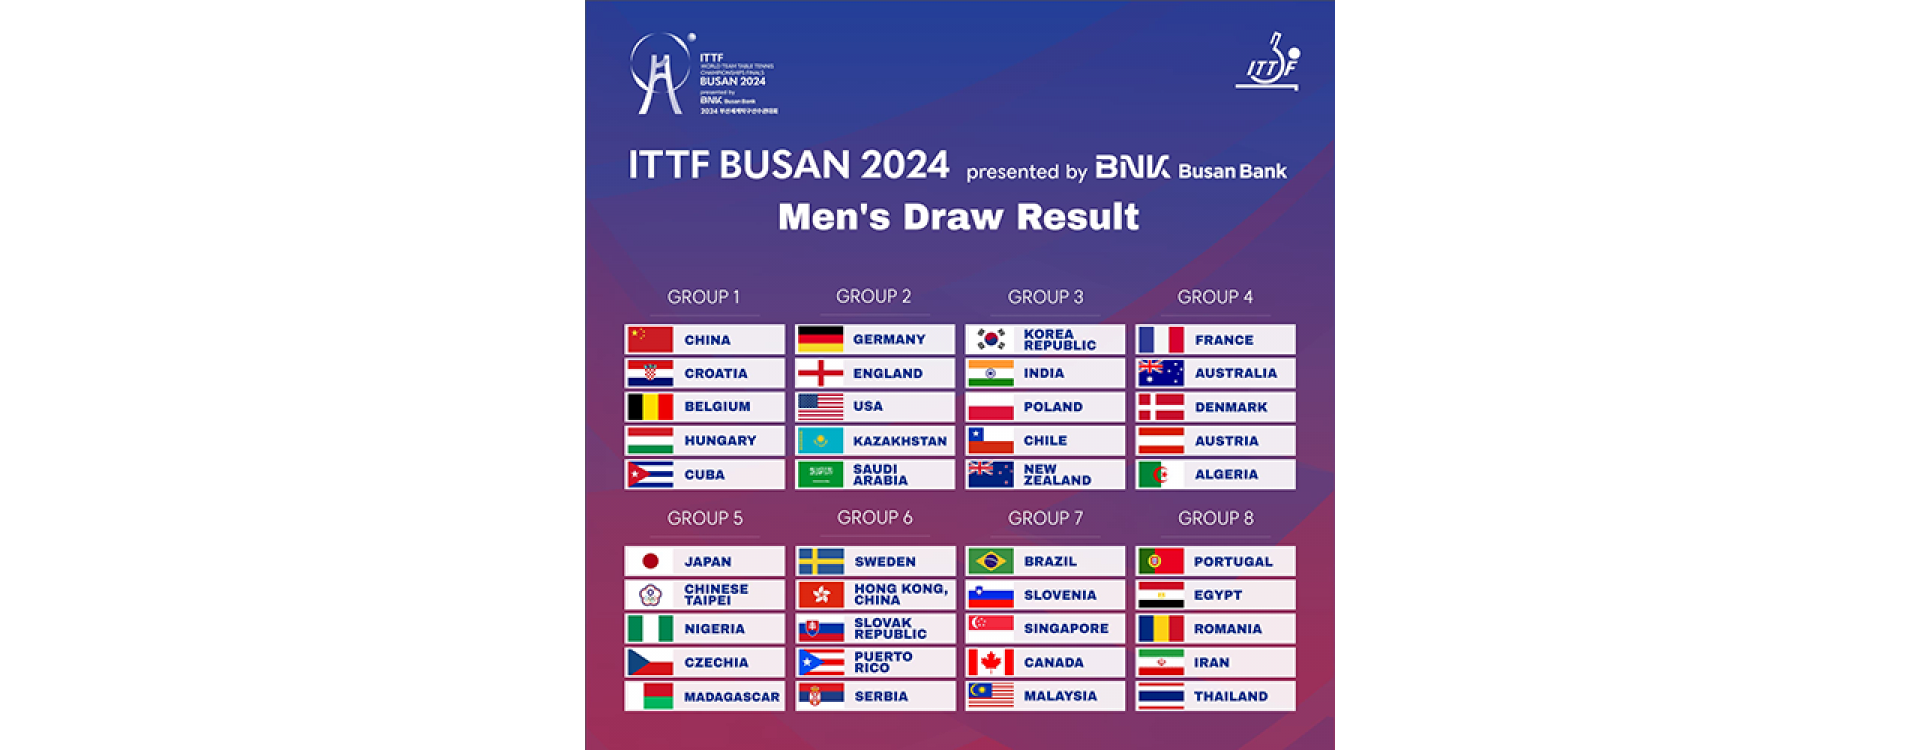 ITTF WORLD TEAM TABLE TENNIS CHAMPIONSHIPS FINALS BUSAN 2024 presented